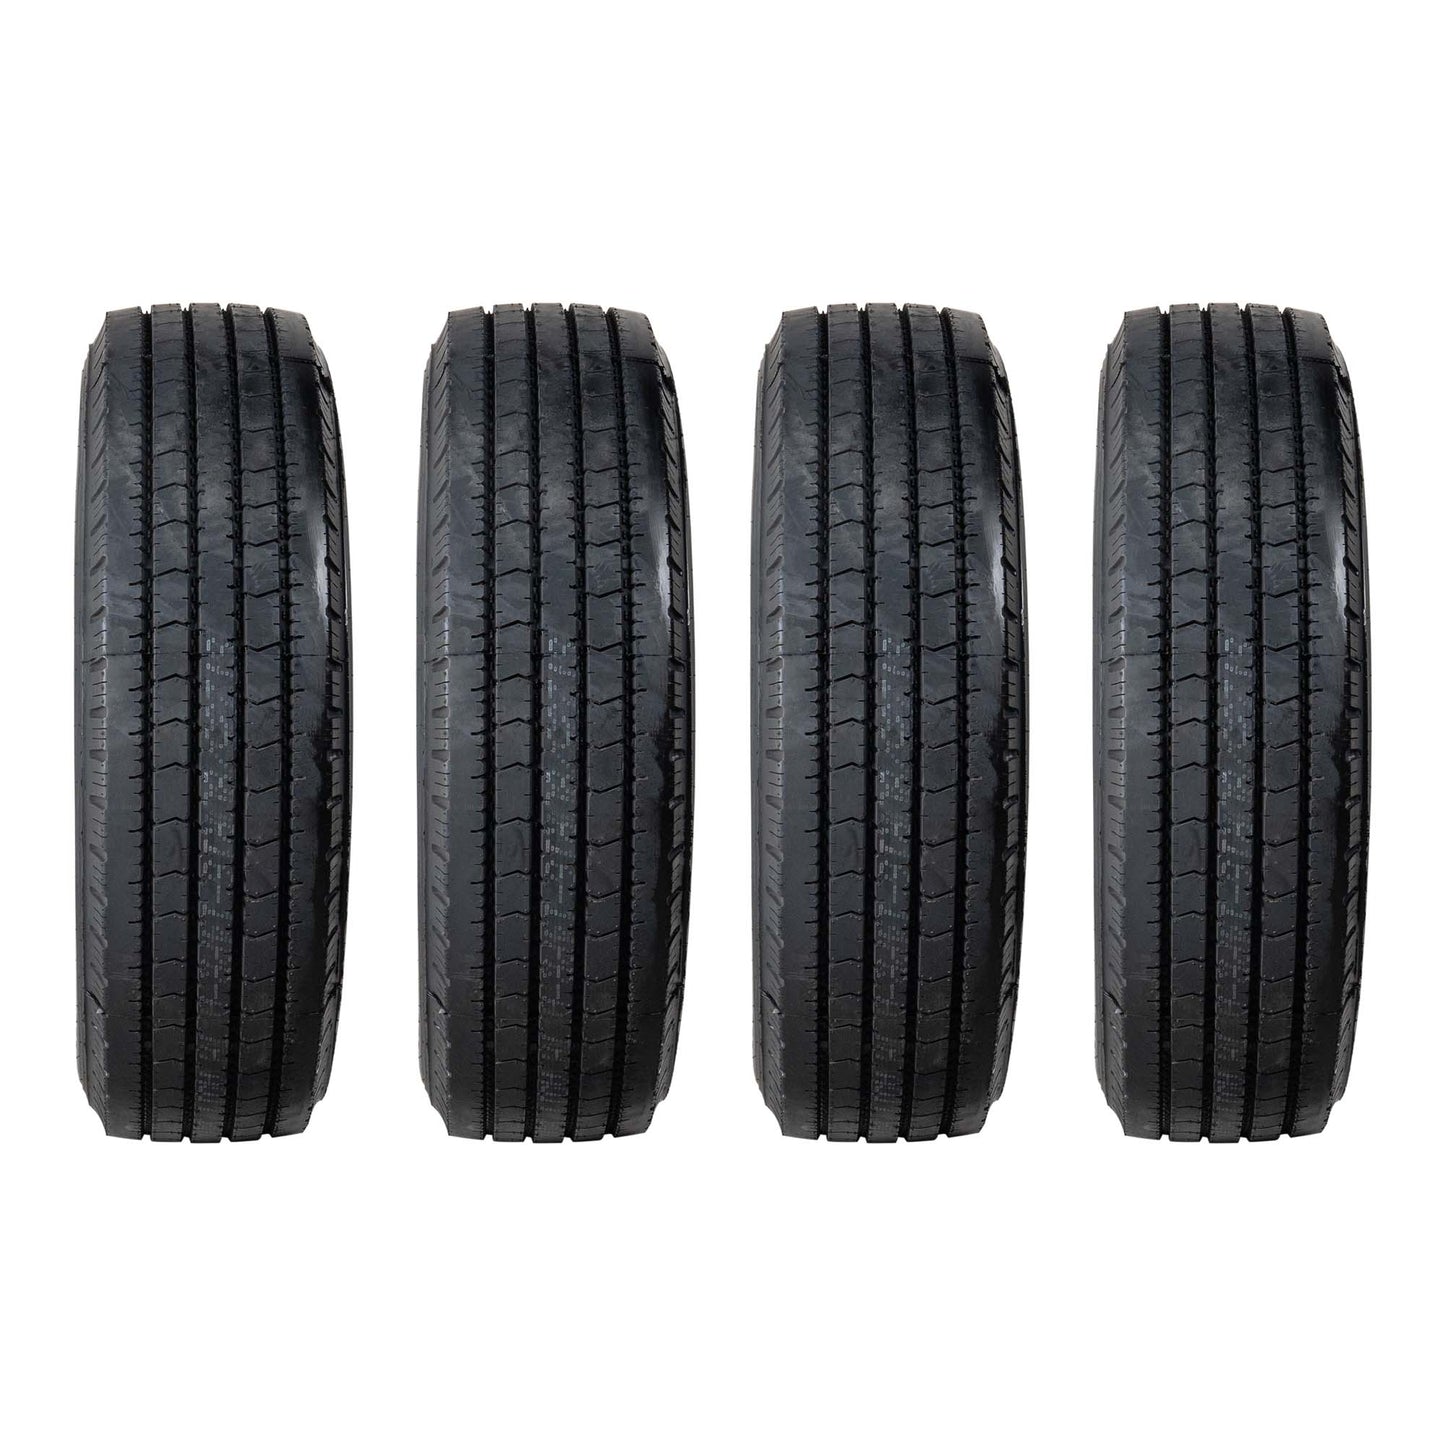 Goodride 235/80R16 14 Ply Trailer Tire